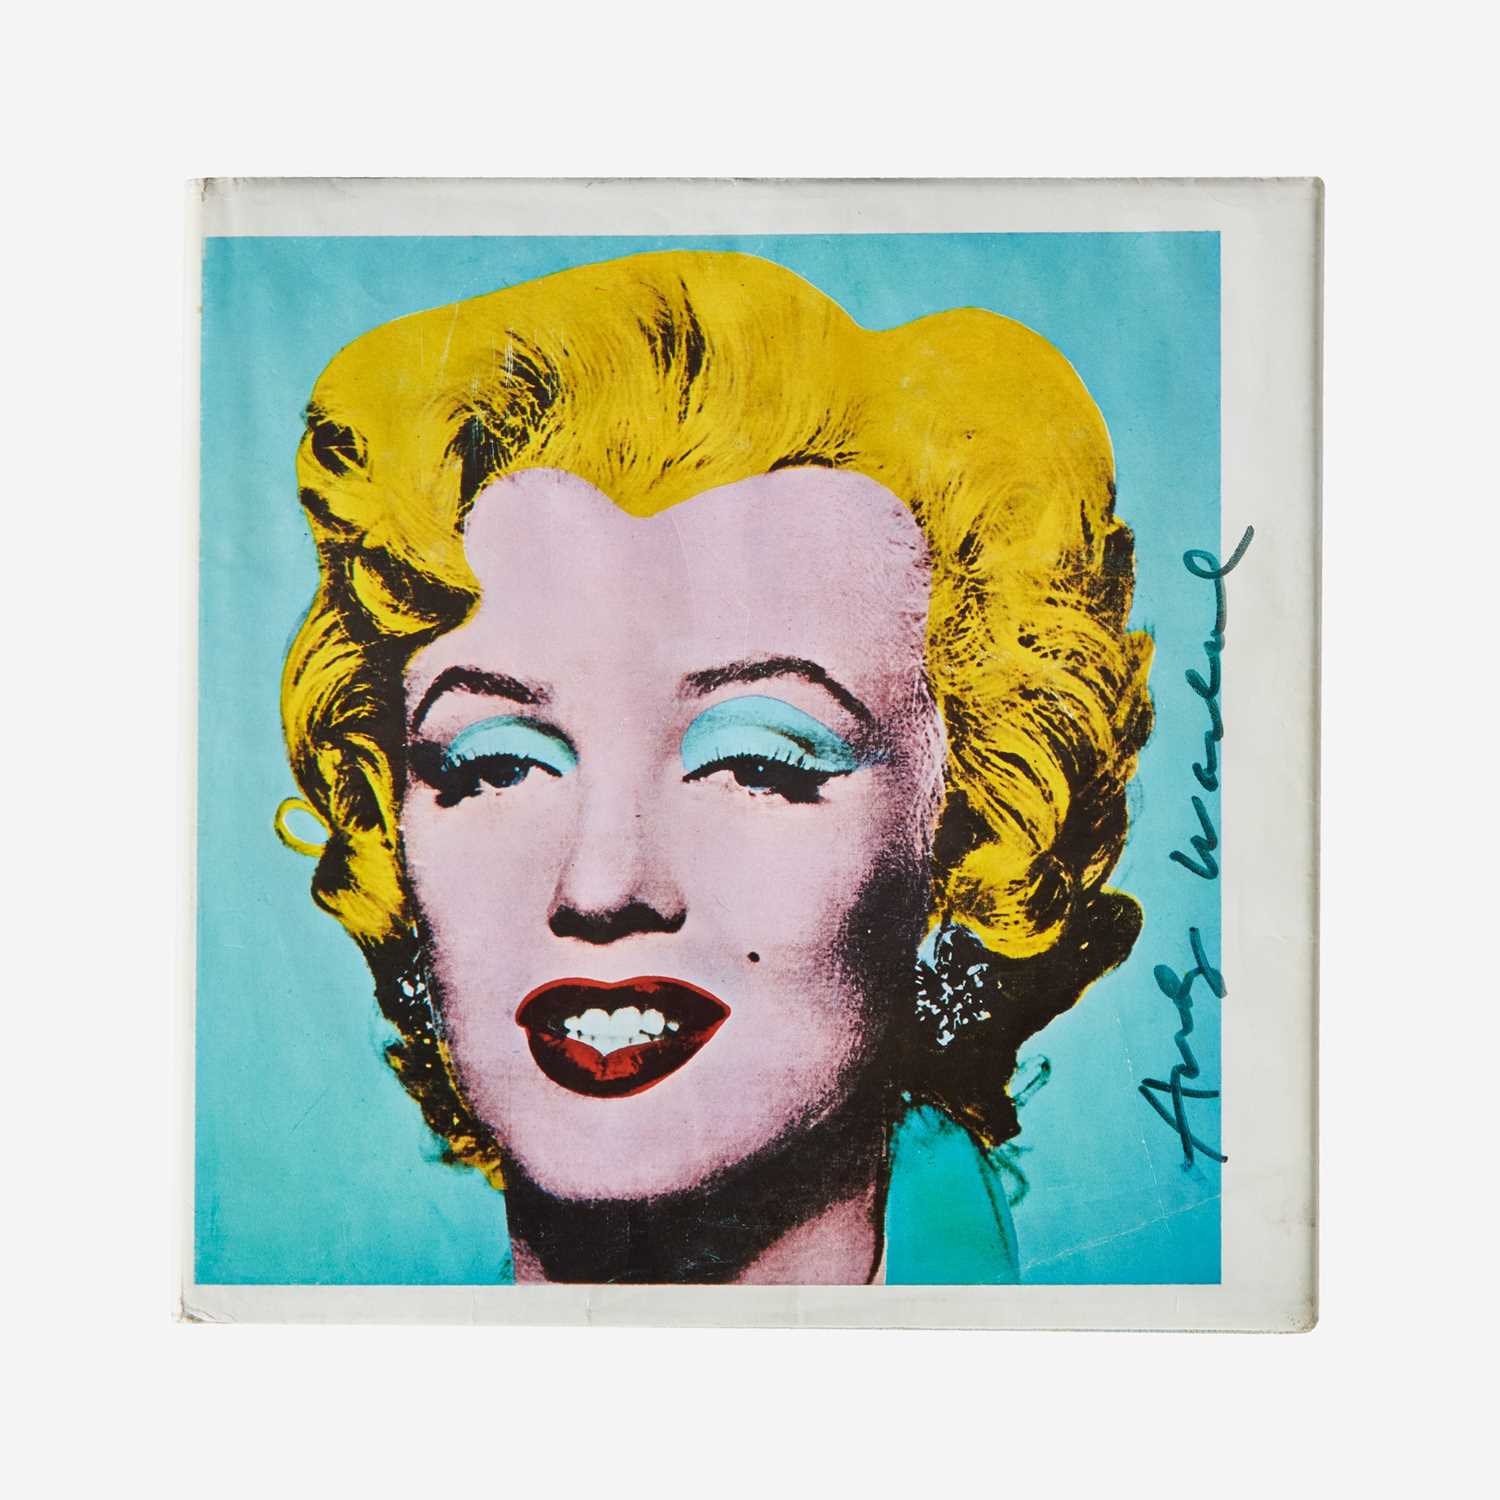 Lot 15 - [Art] [Warhol, Andy] Morphet, Richard